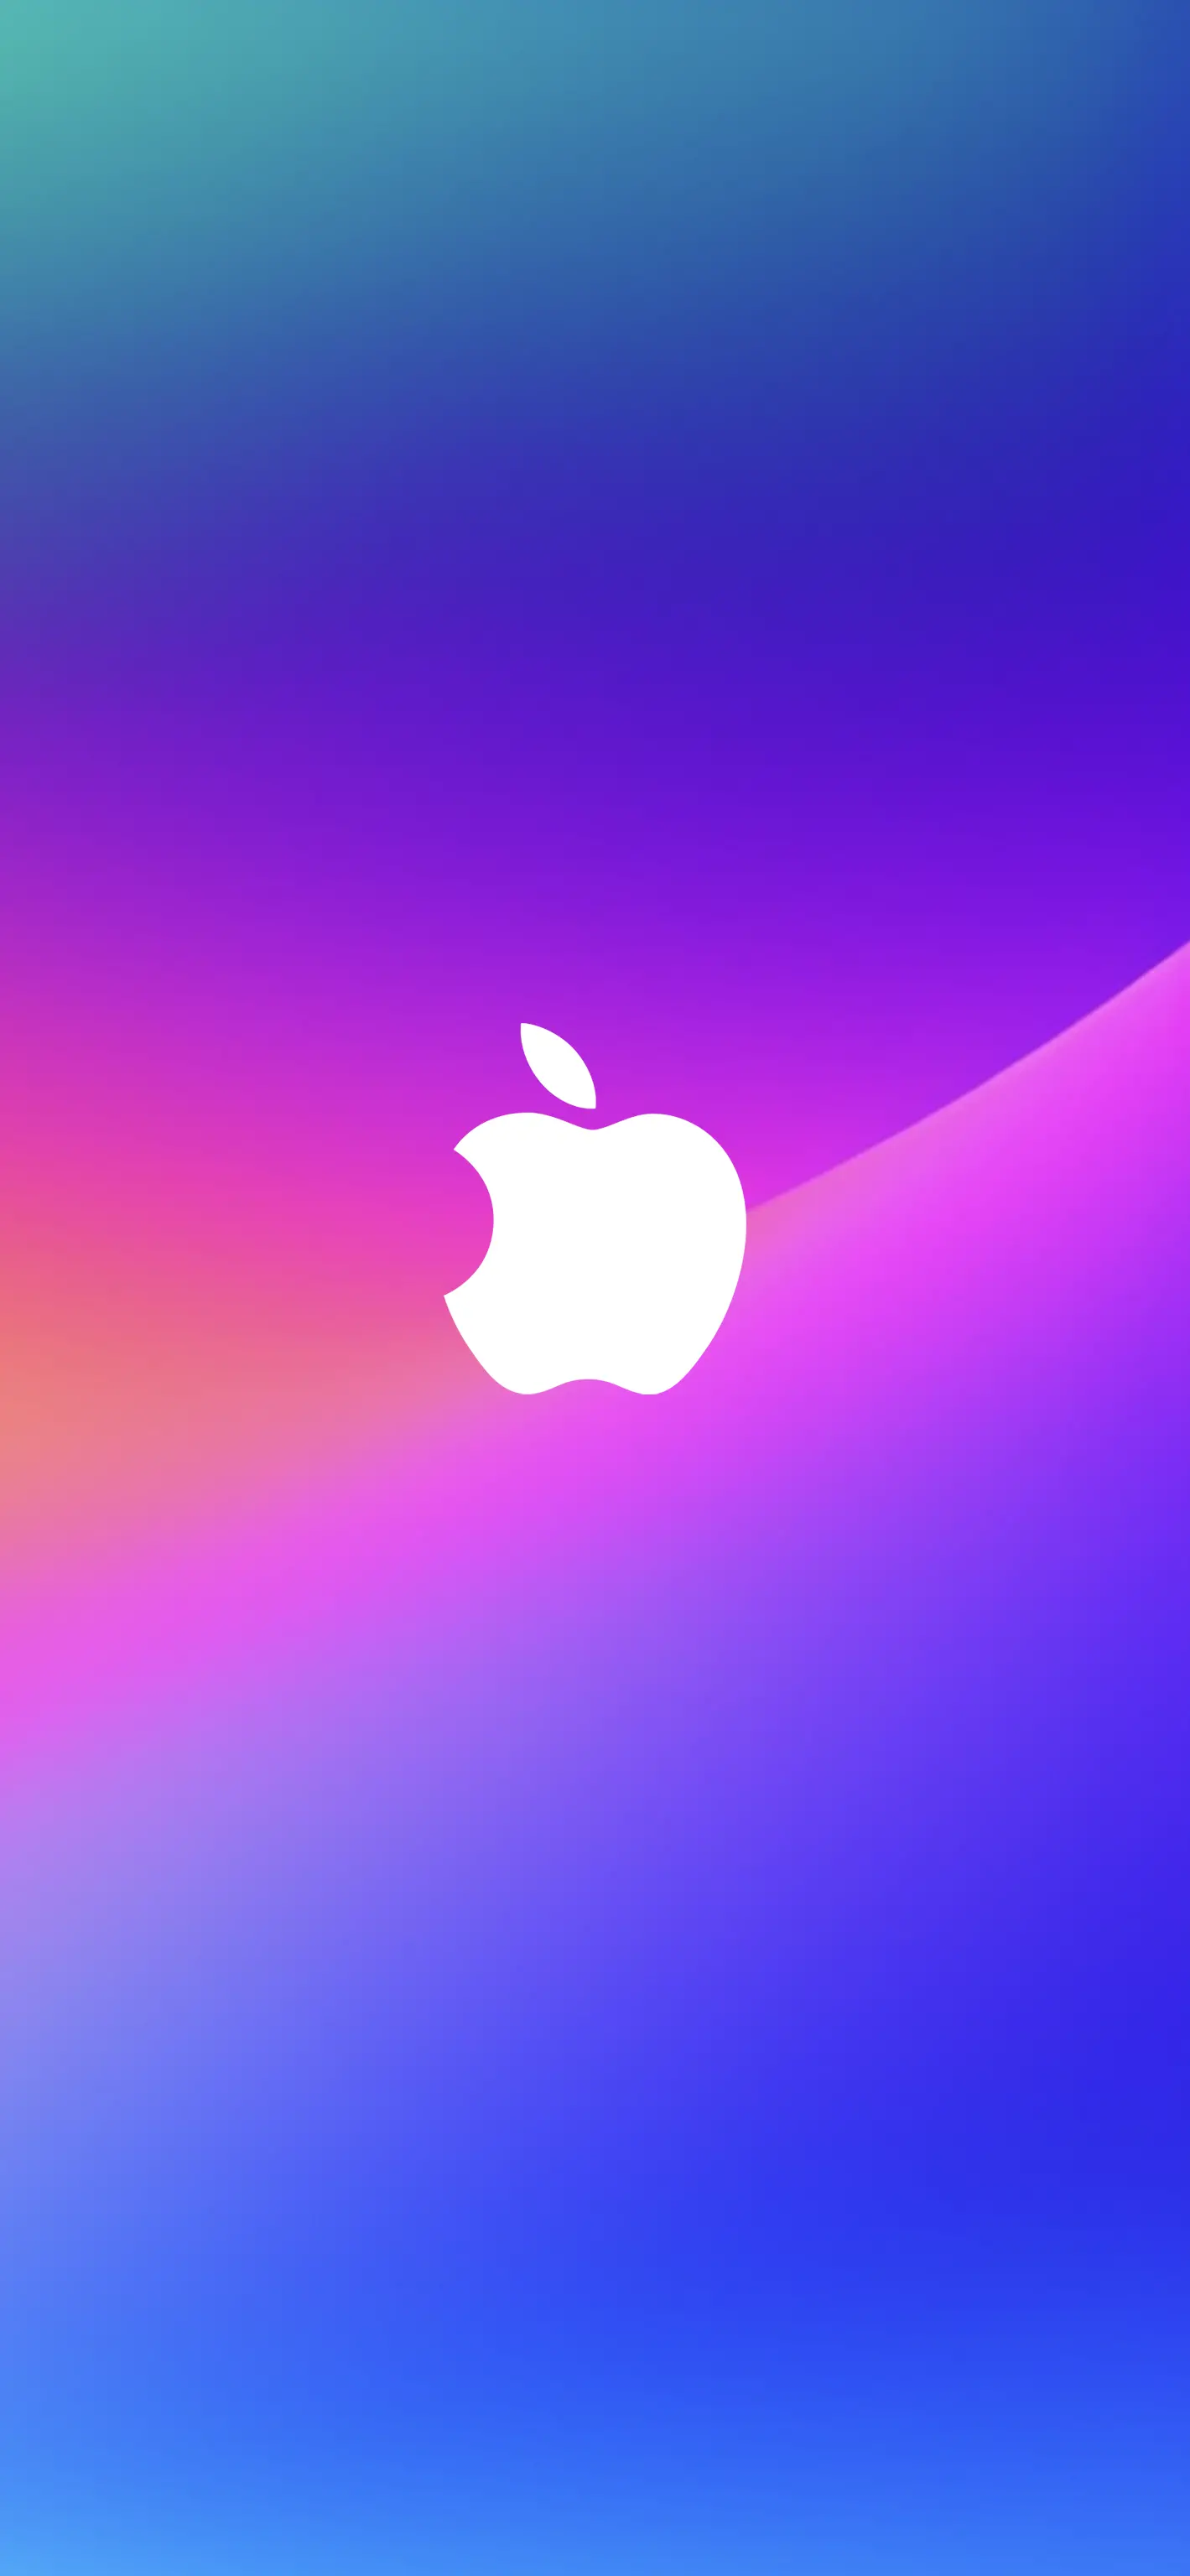 Wallpaper iPhone cantik dan berkualitas tinggi dengan tema logo Apple dengan latar belakang pastel